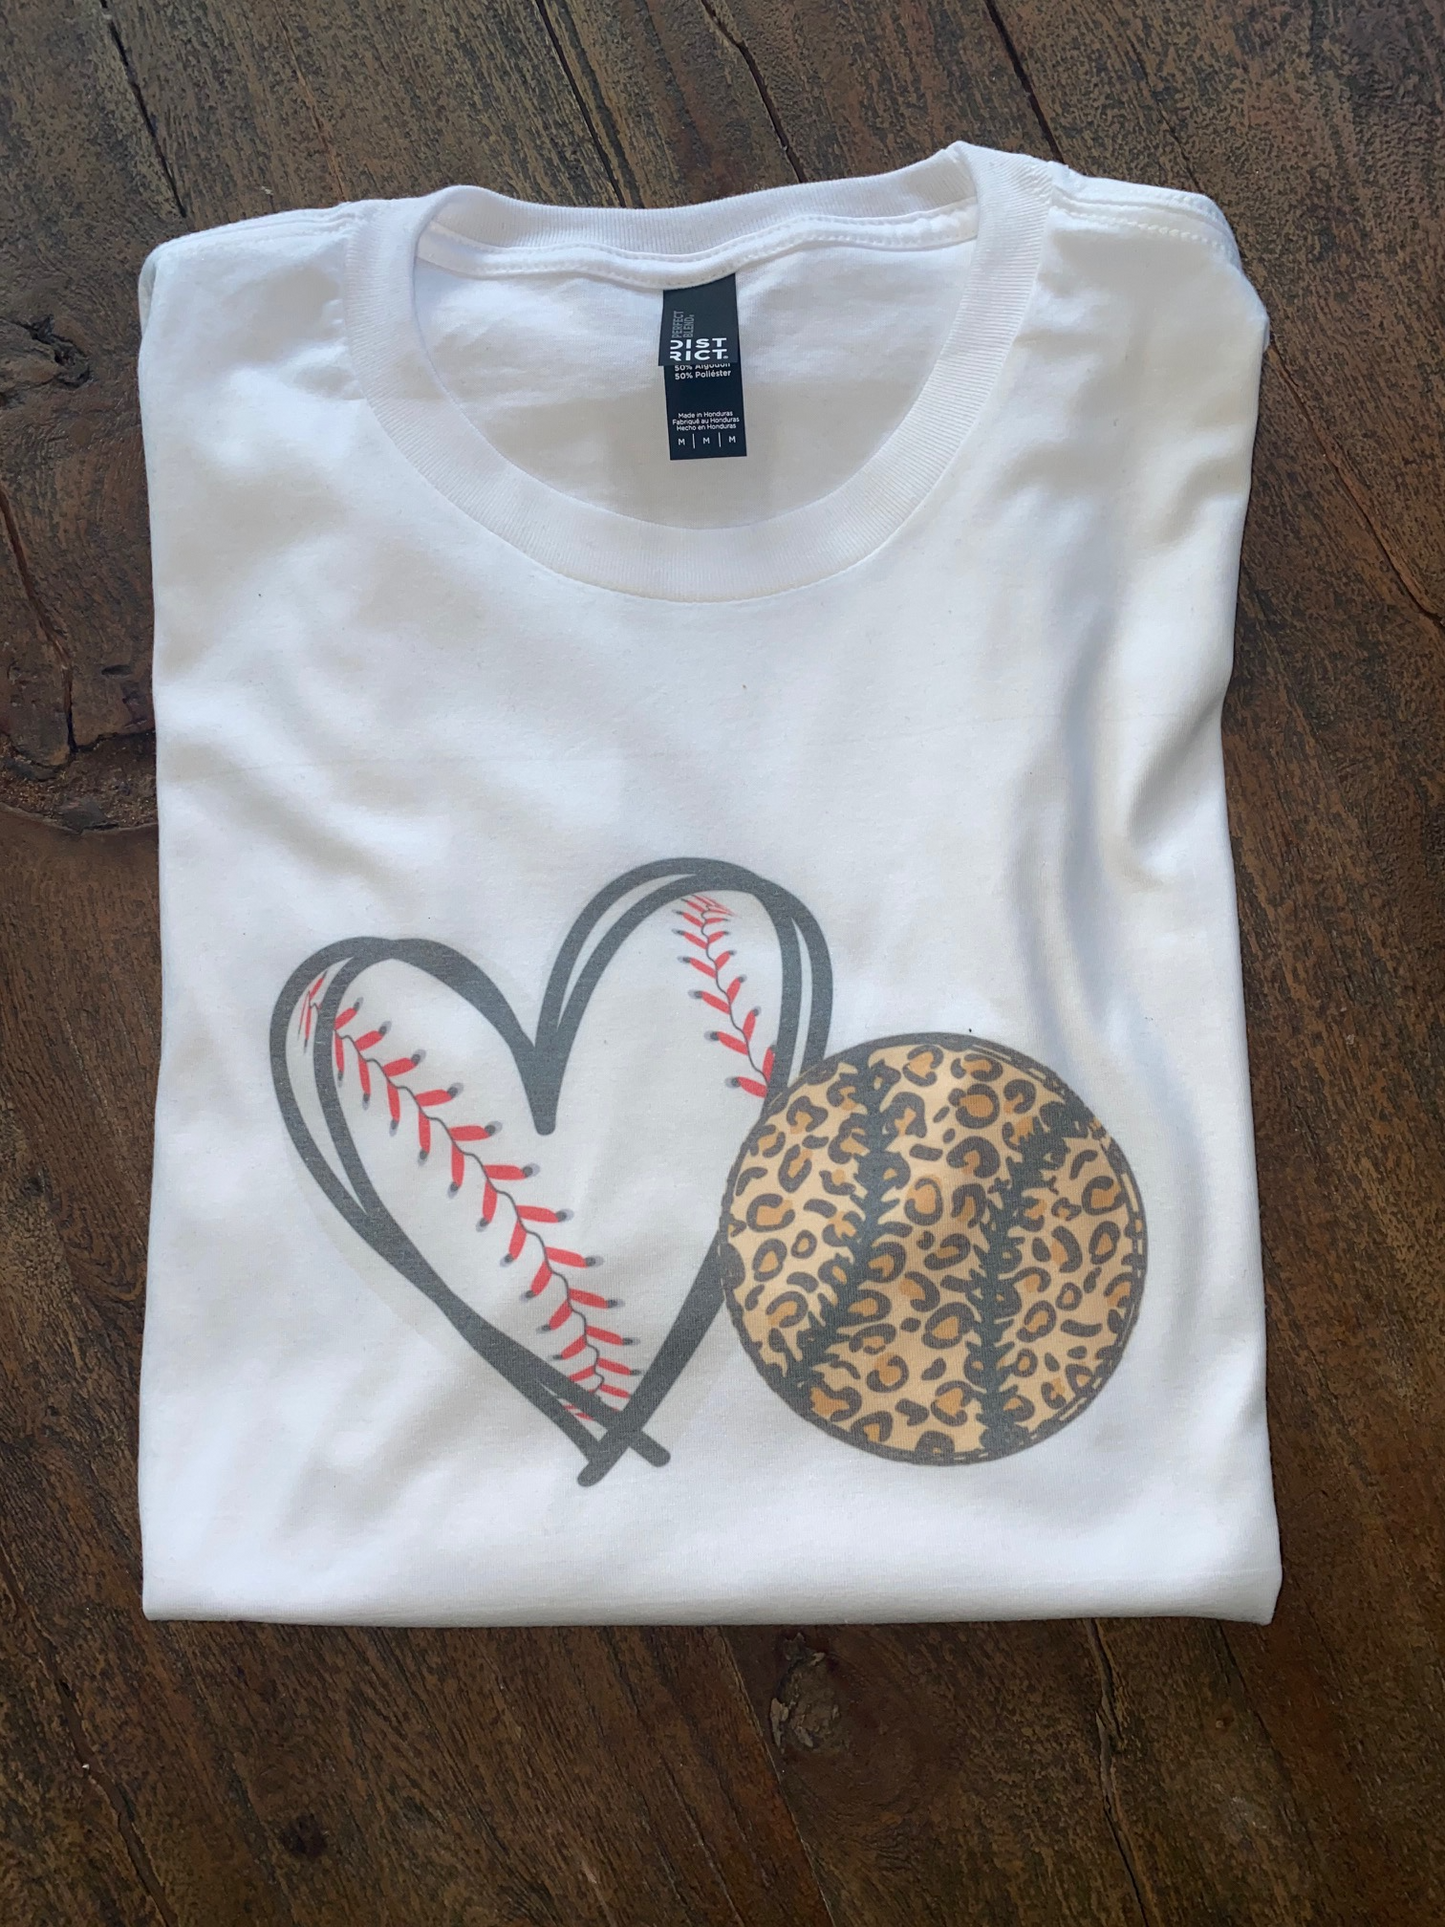 Baseball/Softball Leopard Tee